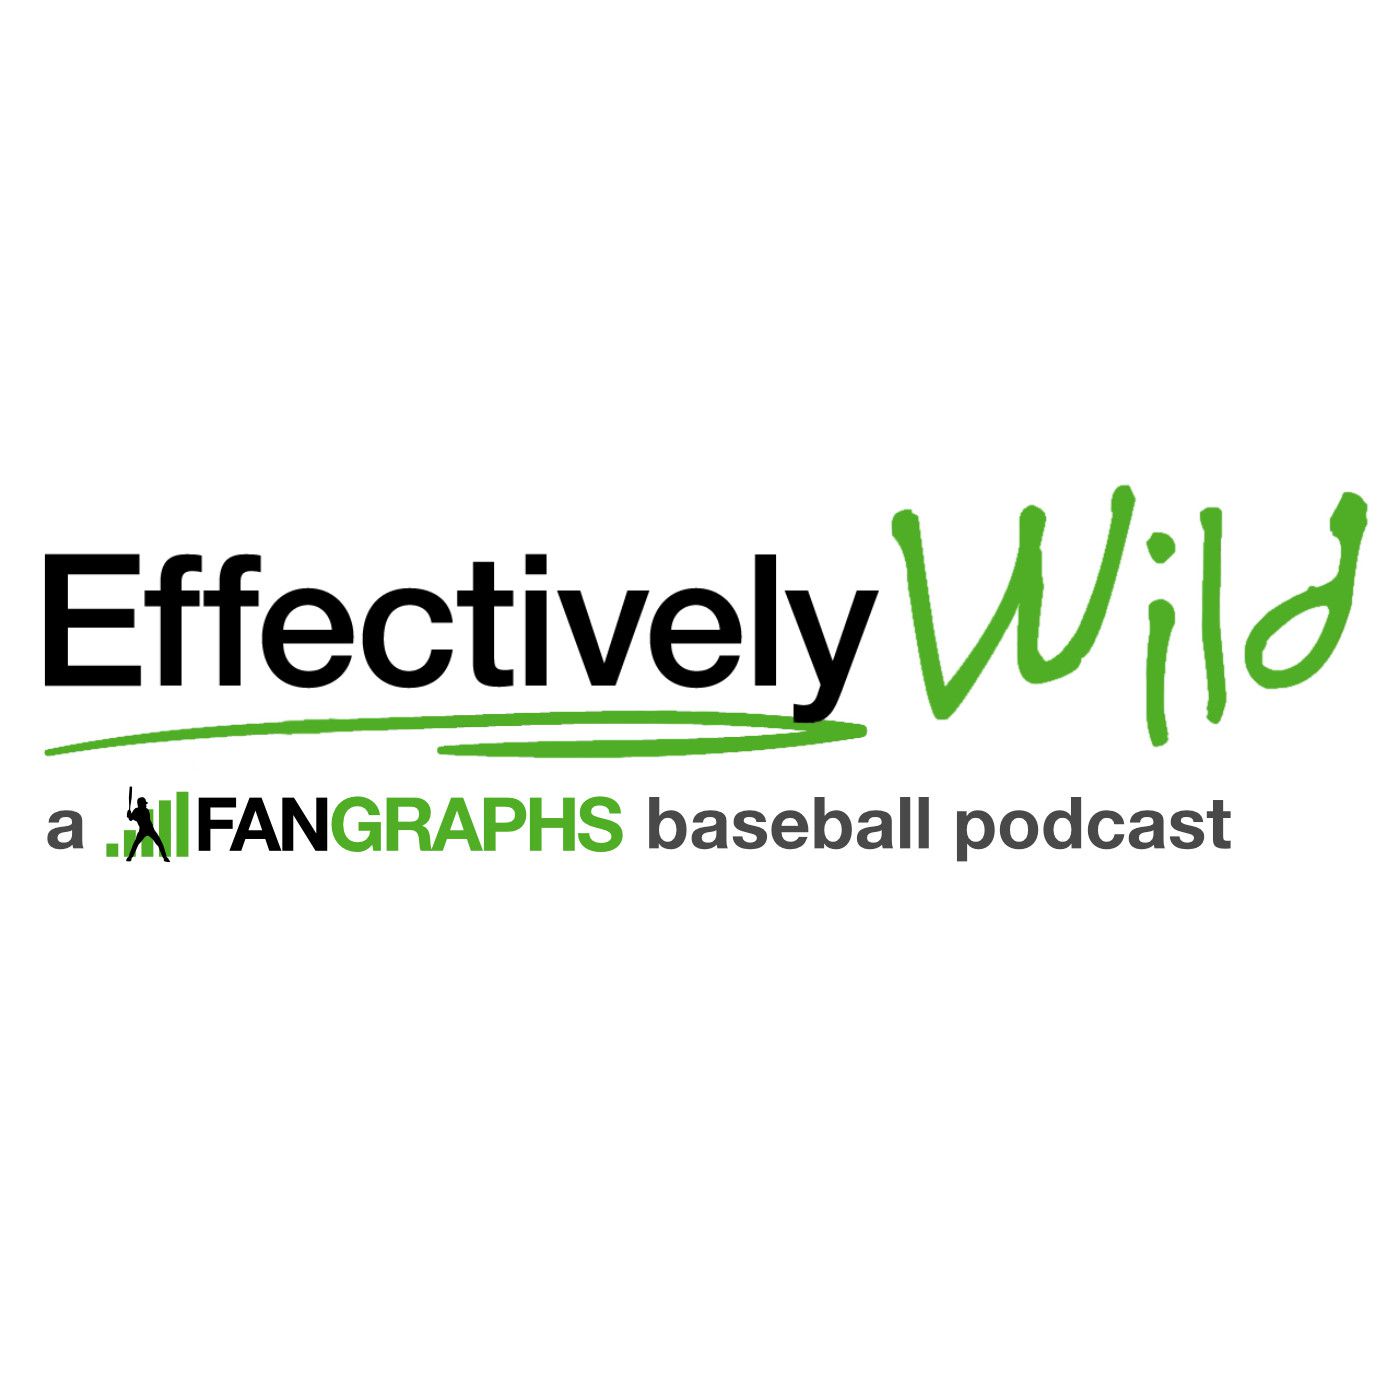 O logotipo do podcast do Effectively Wild